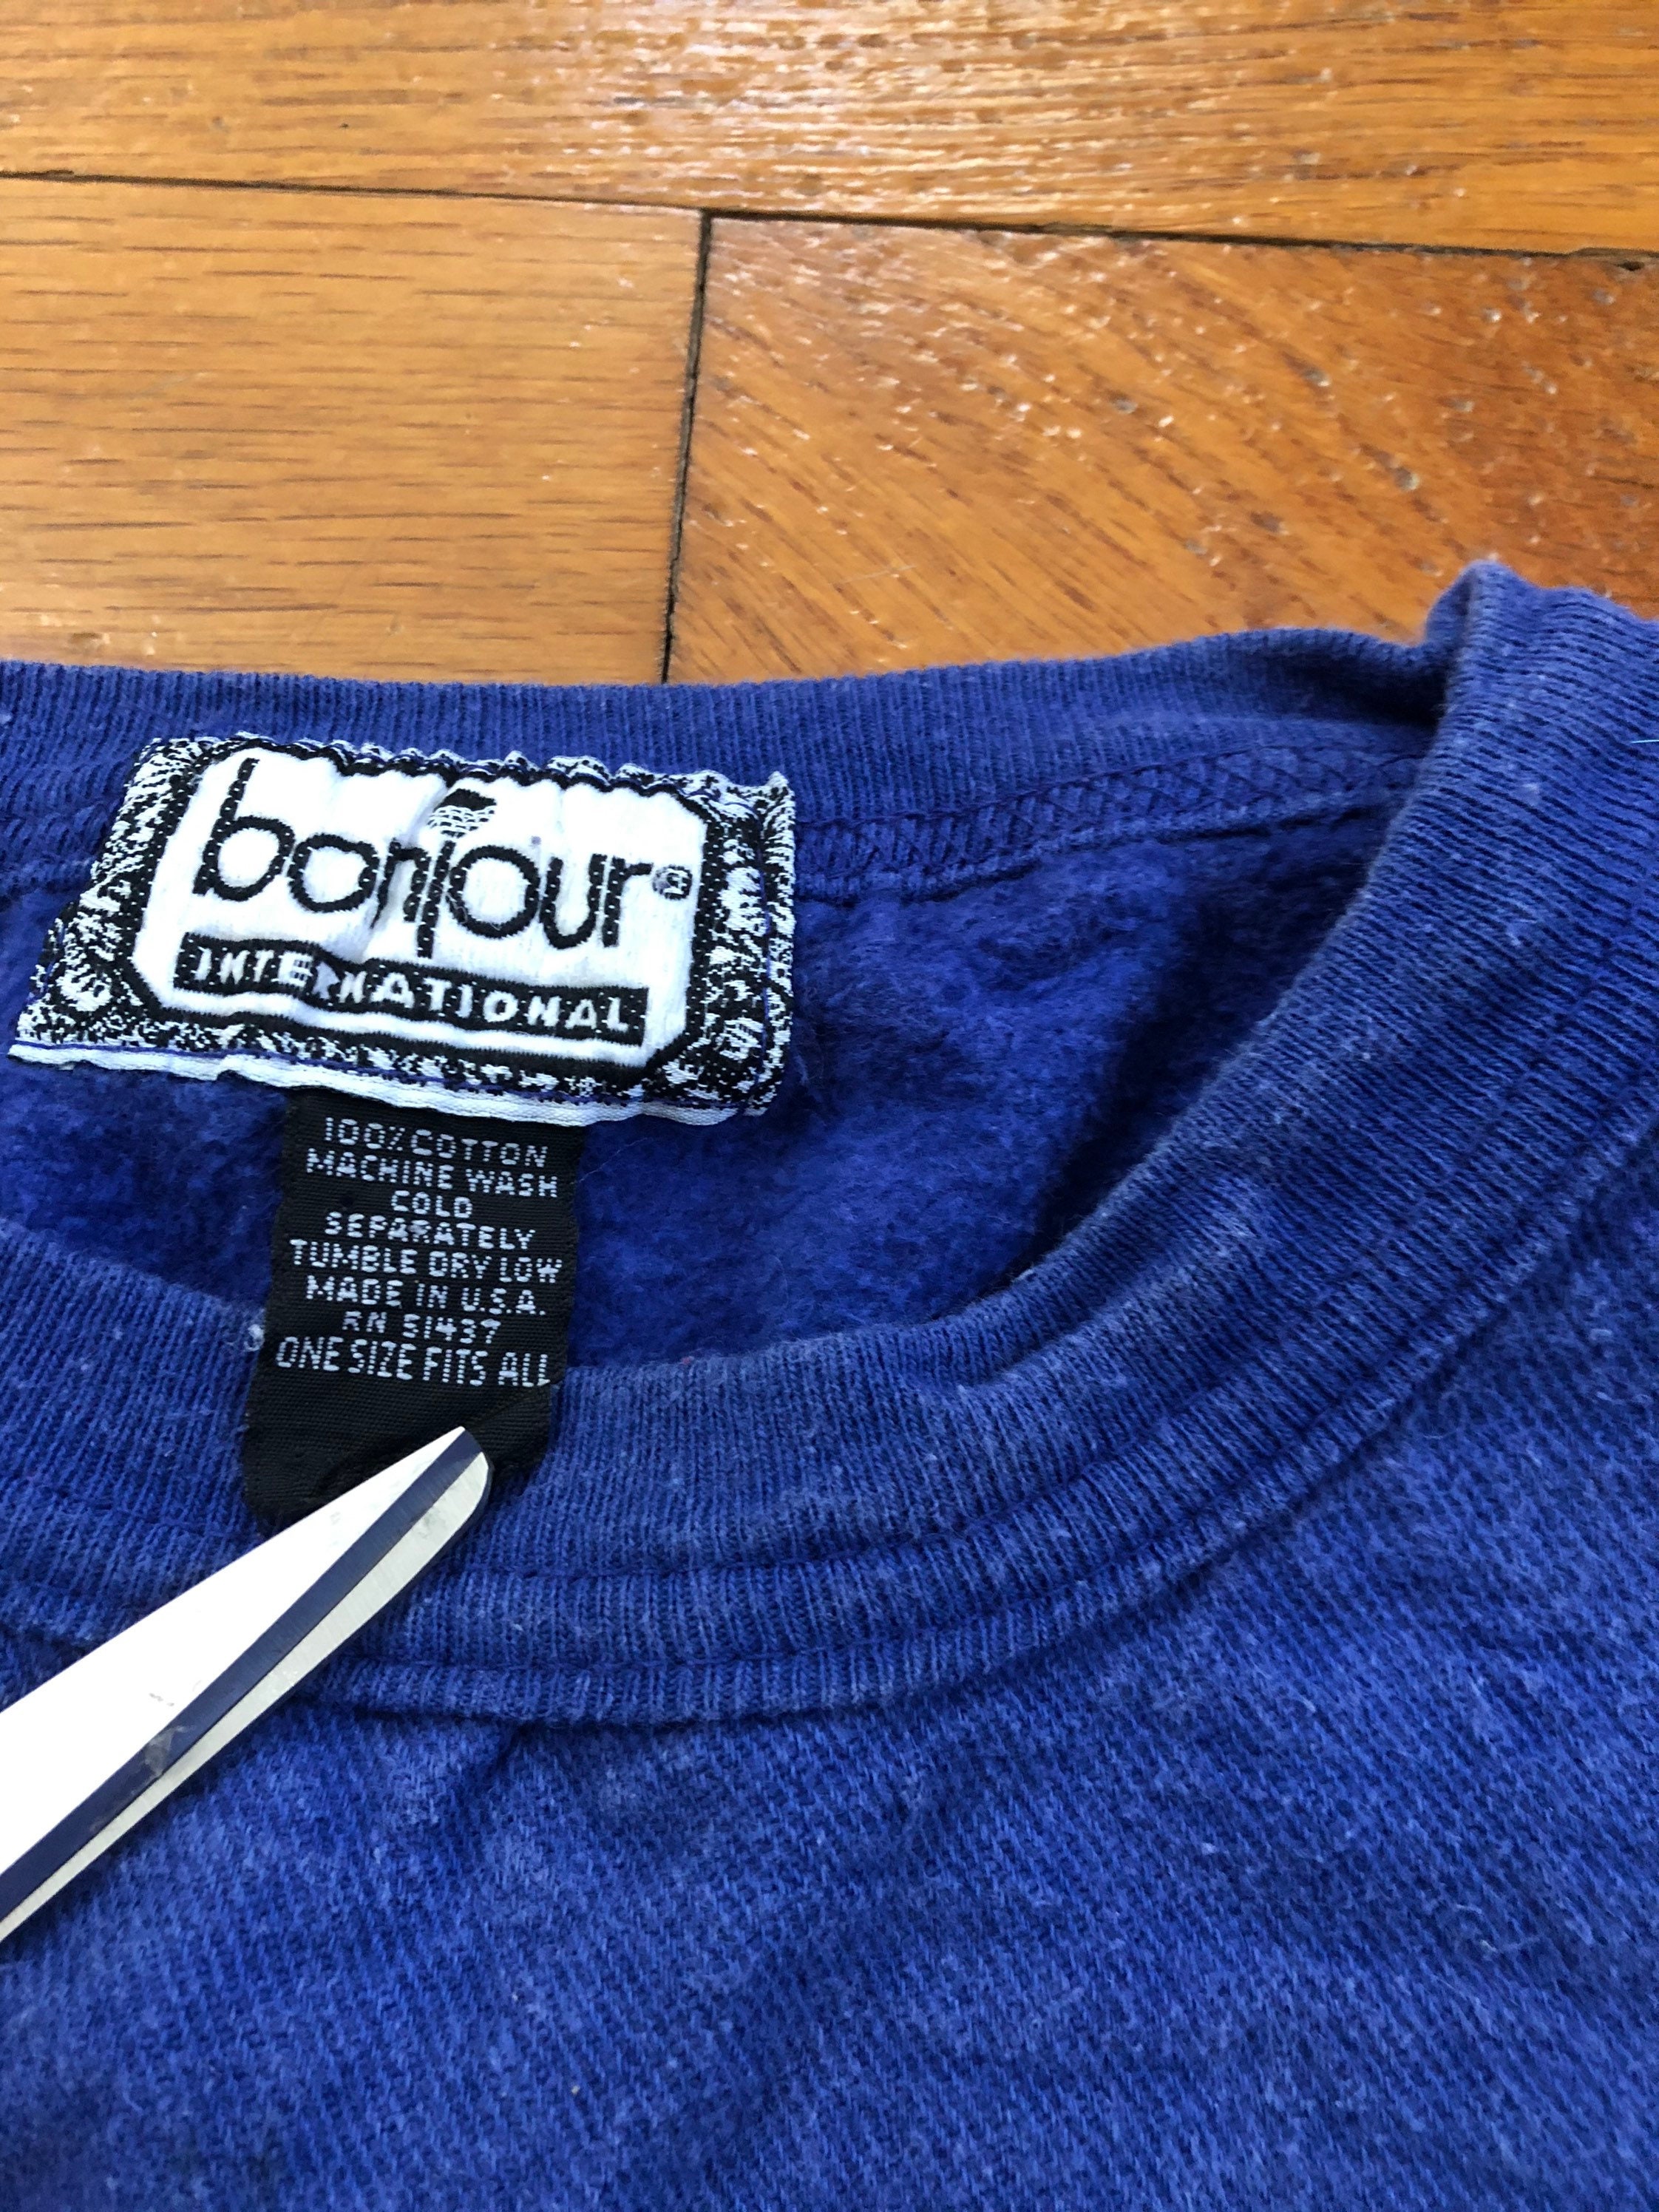 90s Bonjour Logo Sweatshirt Women's One Size Fits All | Etsy